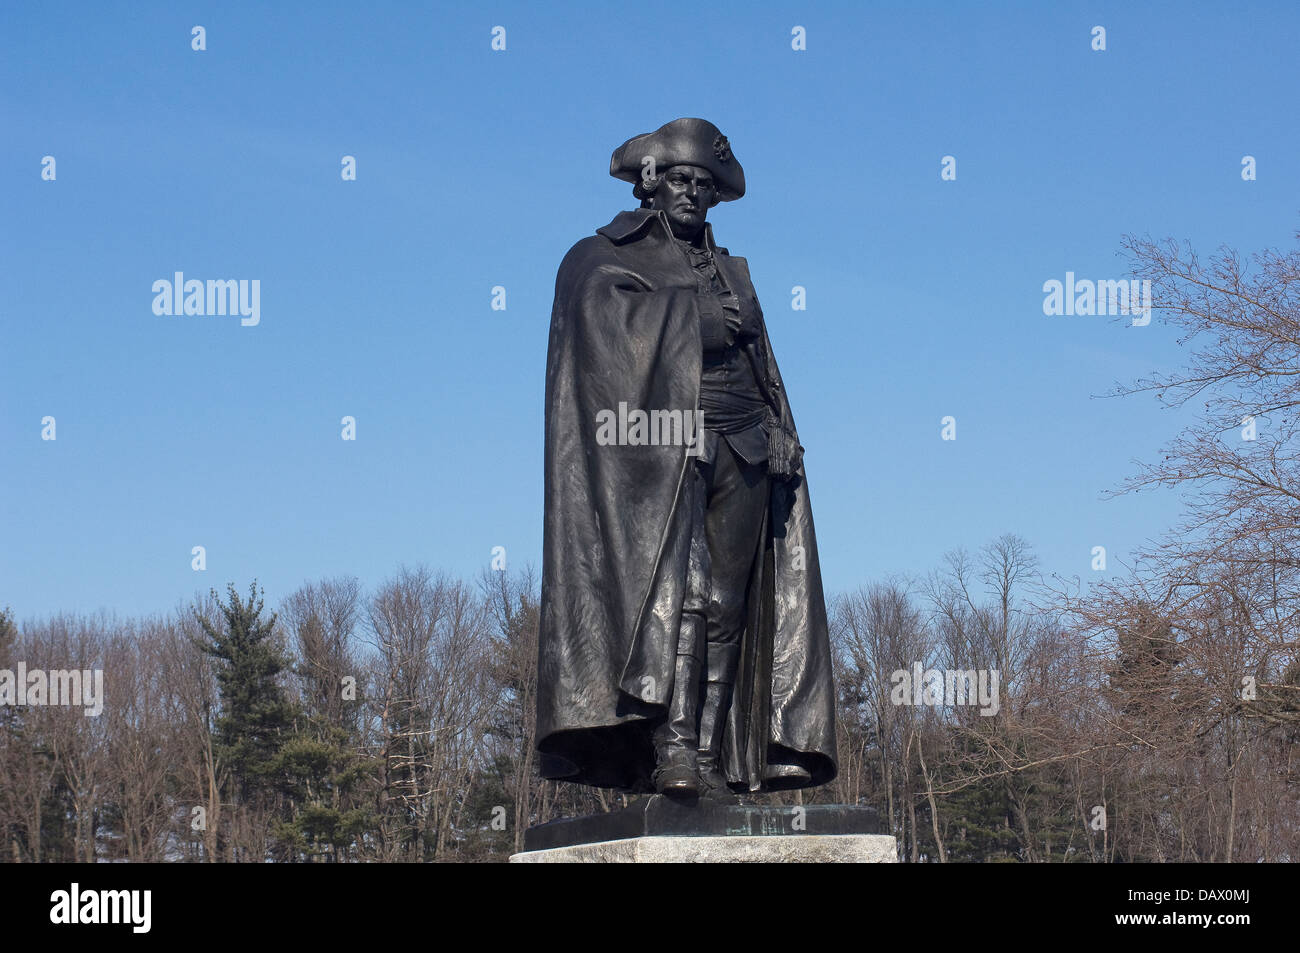 Statue of Prussian drillmaster Baron Von Steuben at Valley Forge, Pennsylvania. Digital photograph Stock Photo